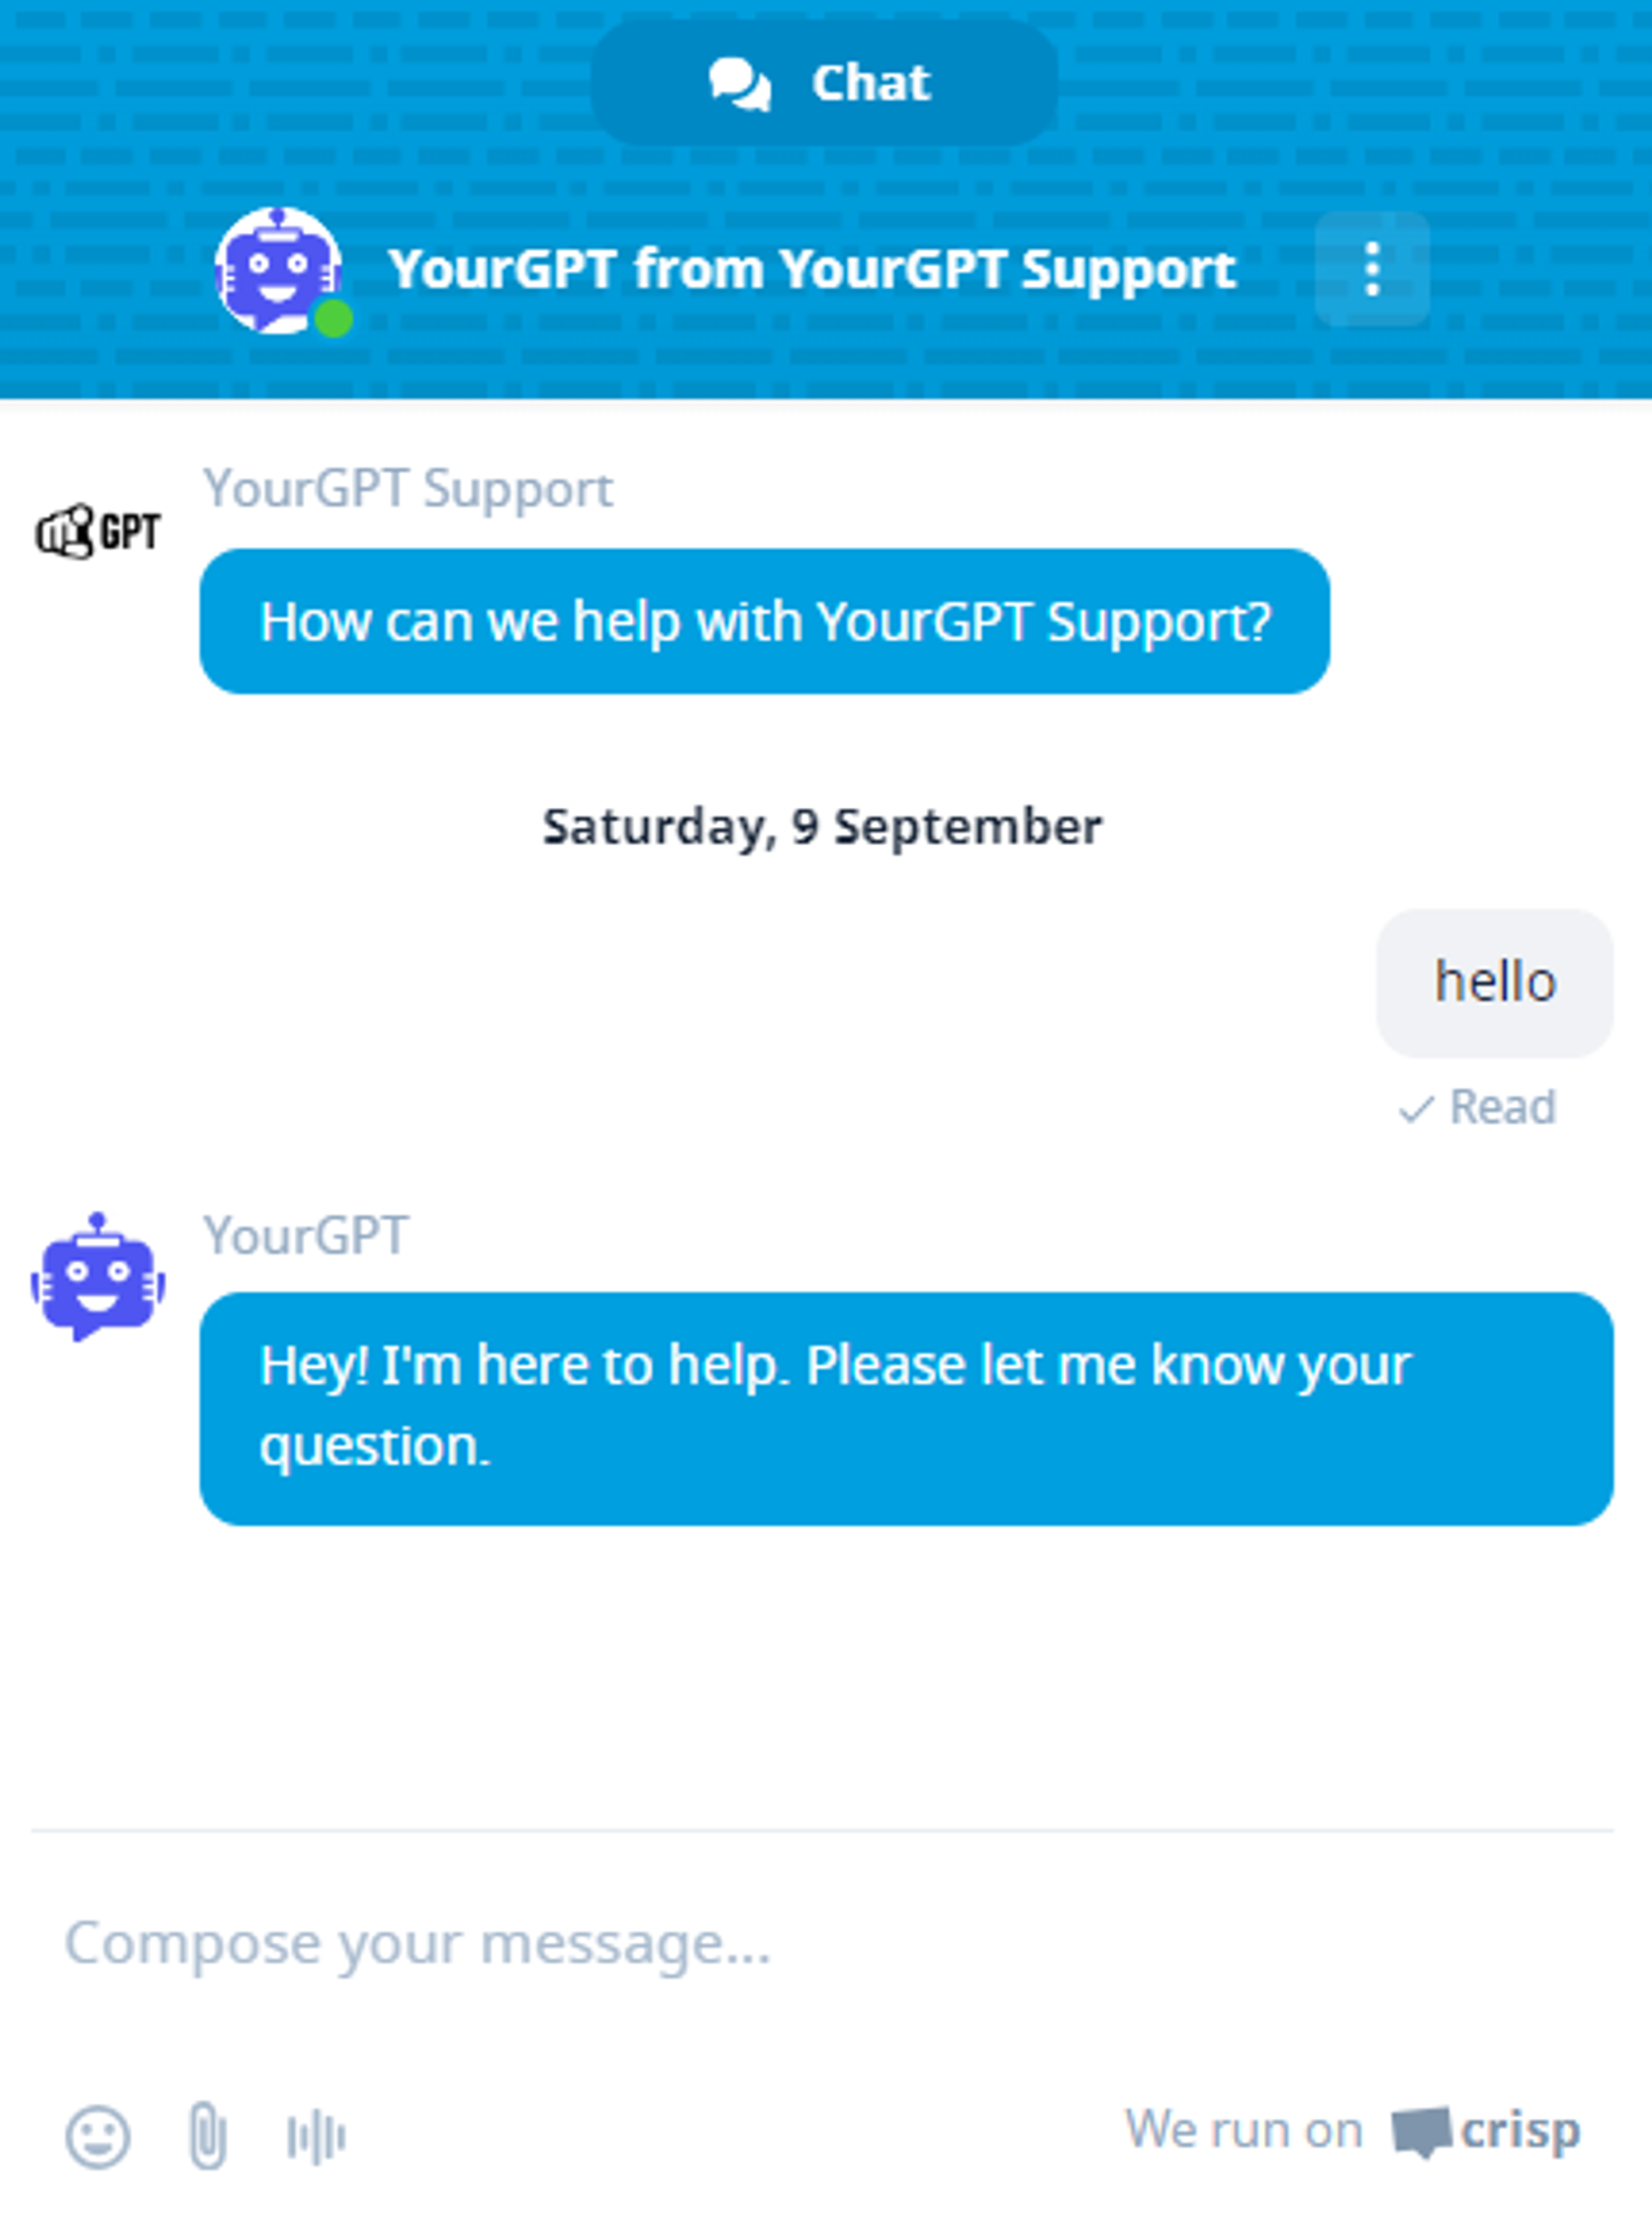 24/7 customer support